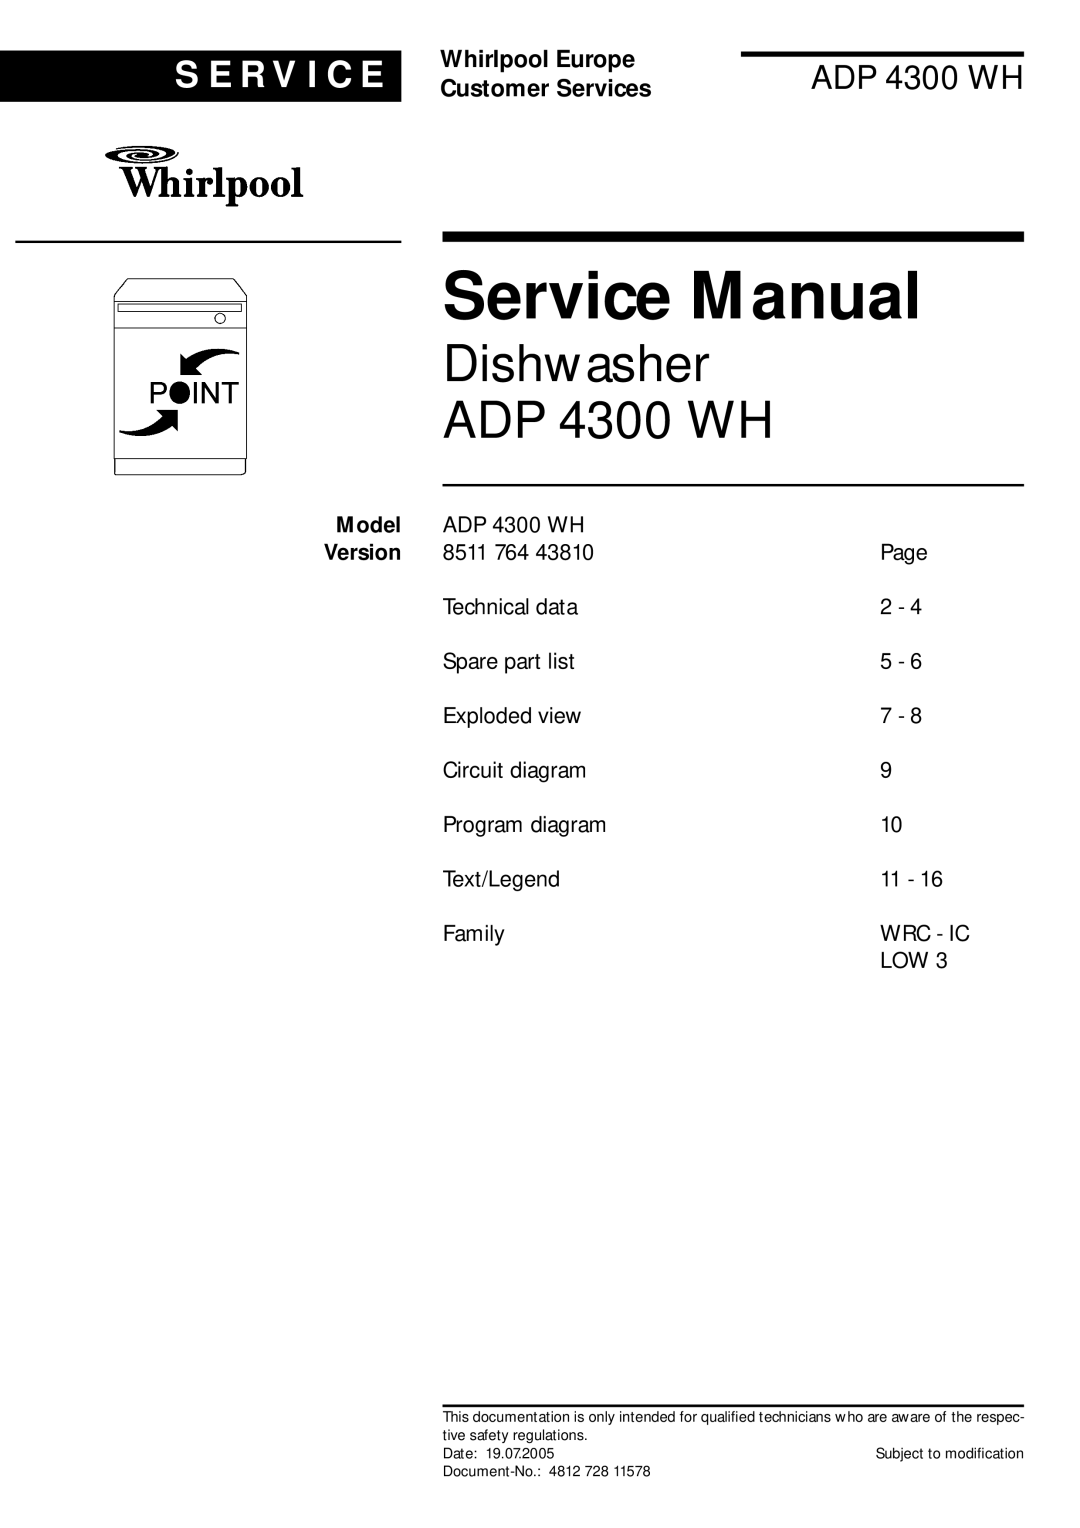 Whirlpool service manual Model, Dishwasher ADP 4300 WH, S E R V I C E, Whirlpool Europe, Customer Services 